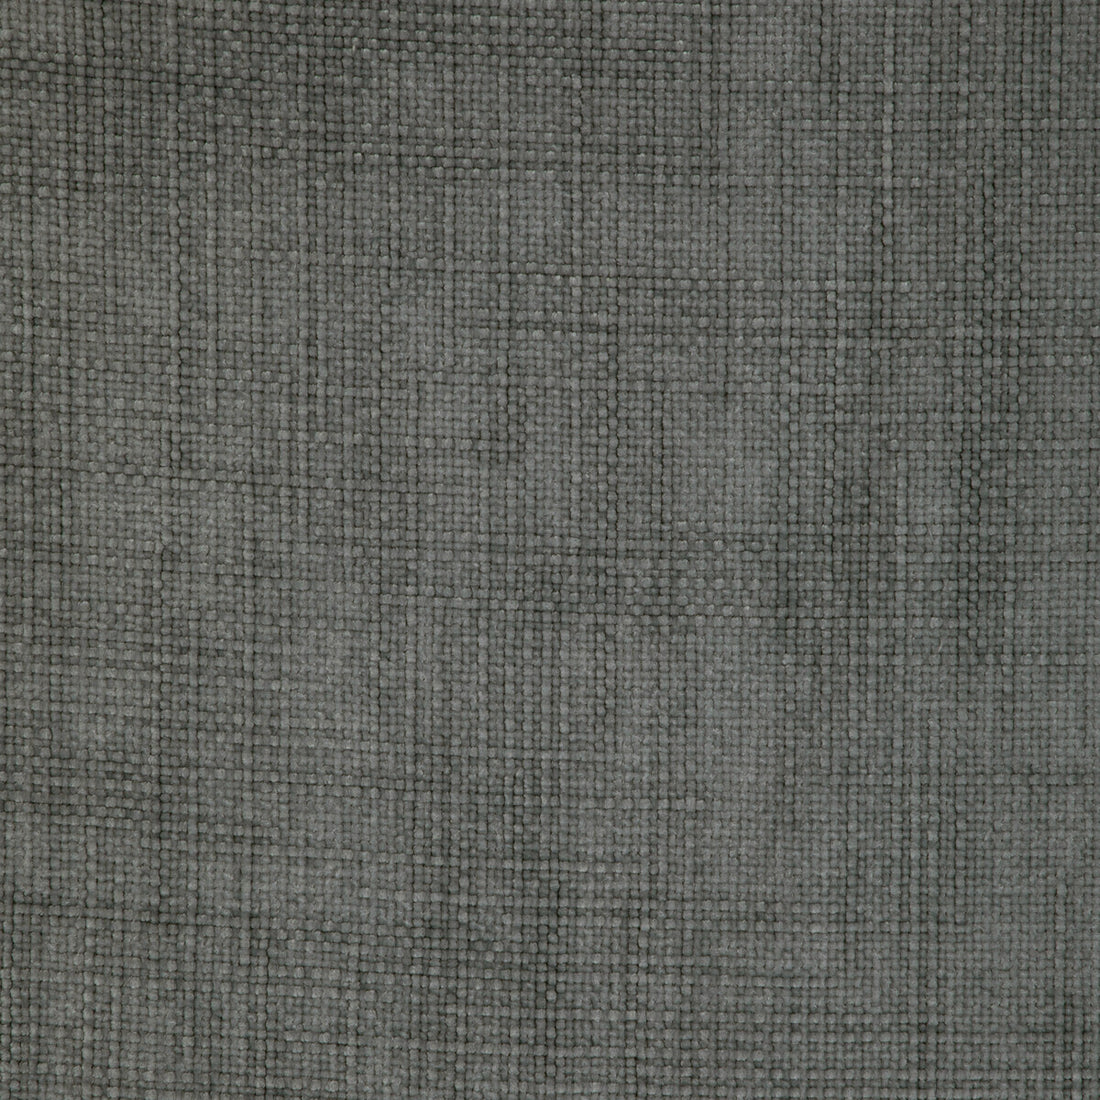 Kravet Smart fabric in 36991-1121 color - pattern 36991.1121.0 - by Kravet Smart in the Performance Kravetarmor collection